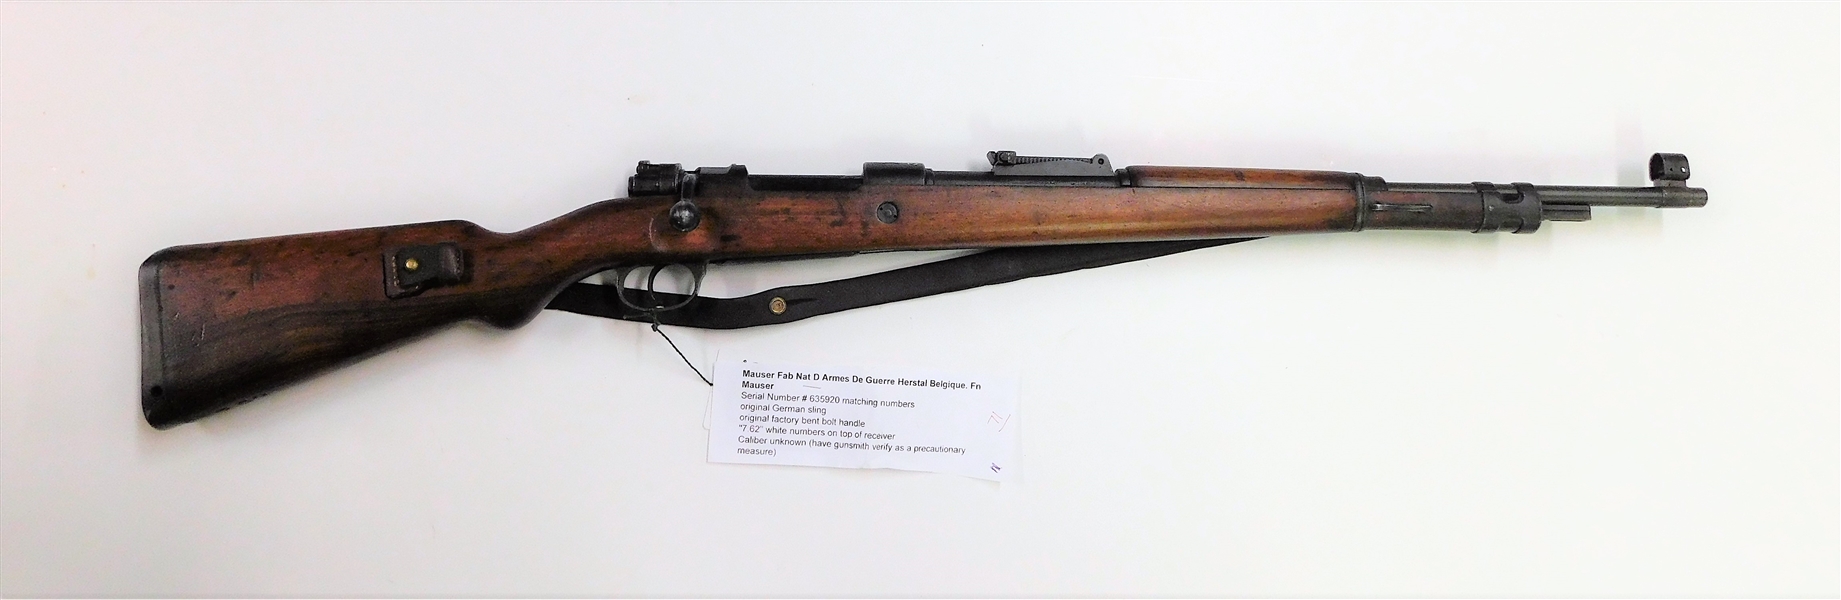 Mauser Fab Nat D Armed De Guerre Herstal Belgique Mauser Rifle 7.62 - Original German Sling and Factory Bent Bolt